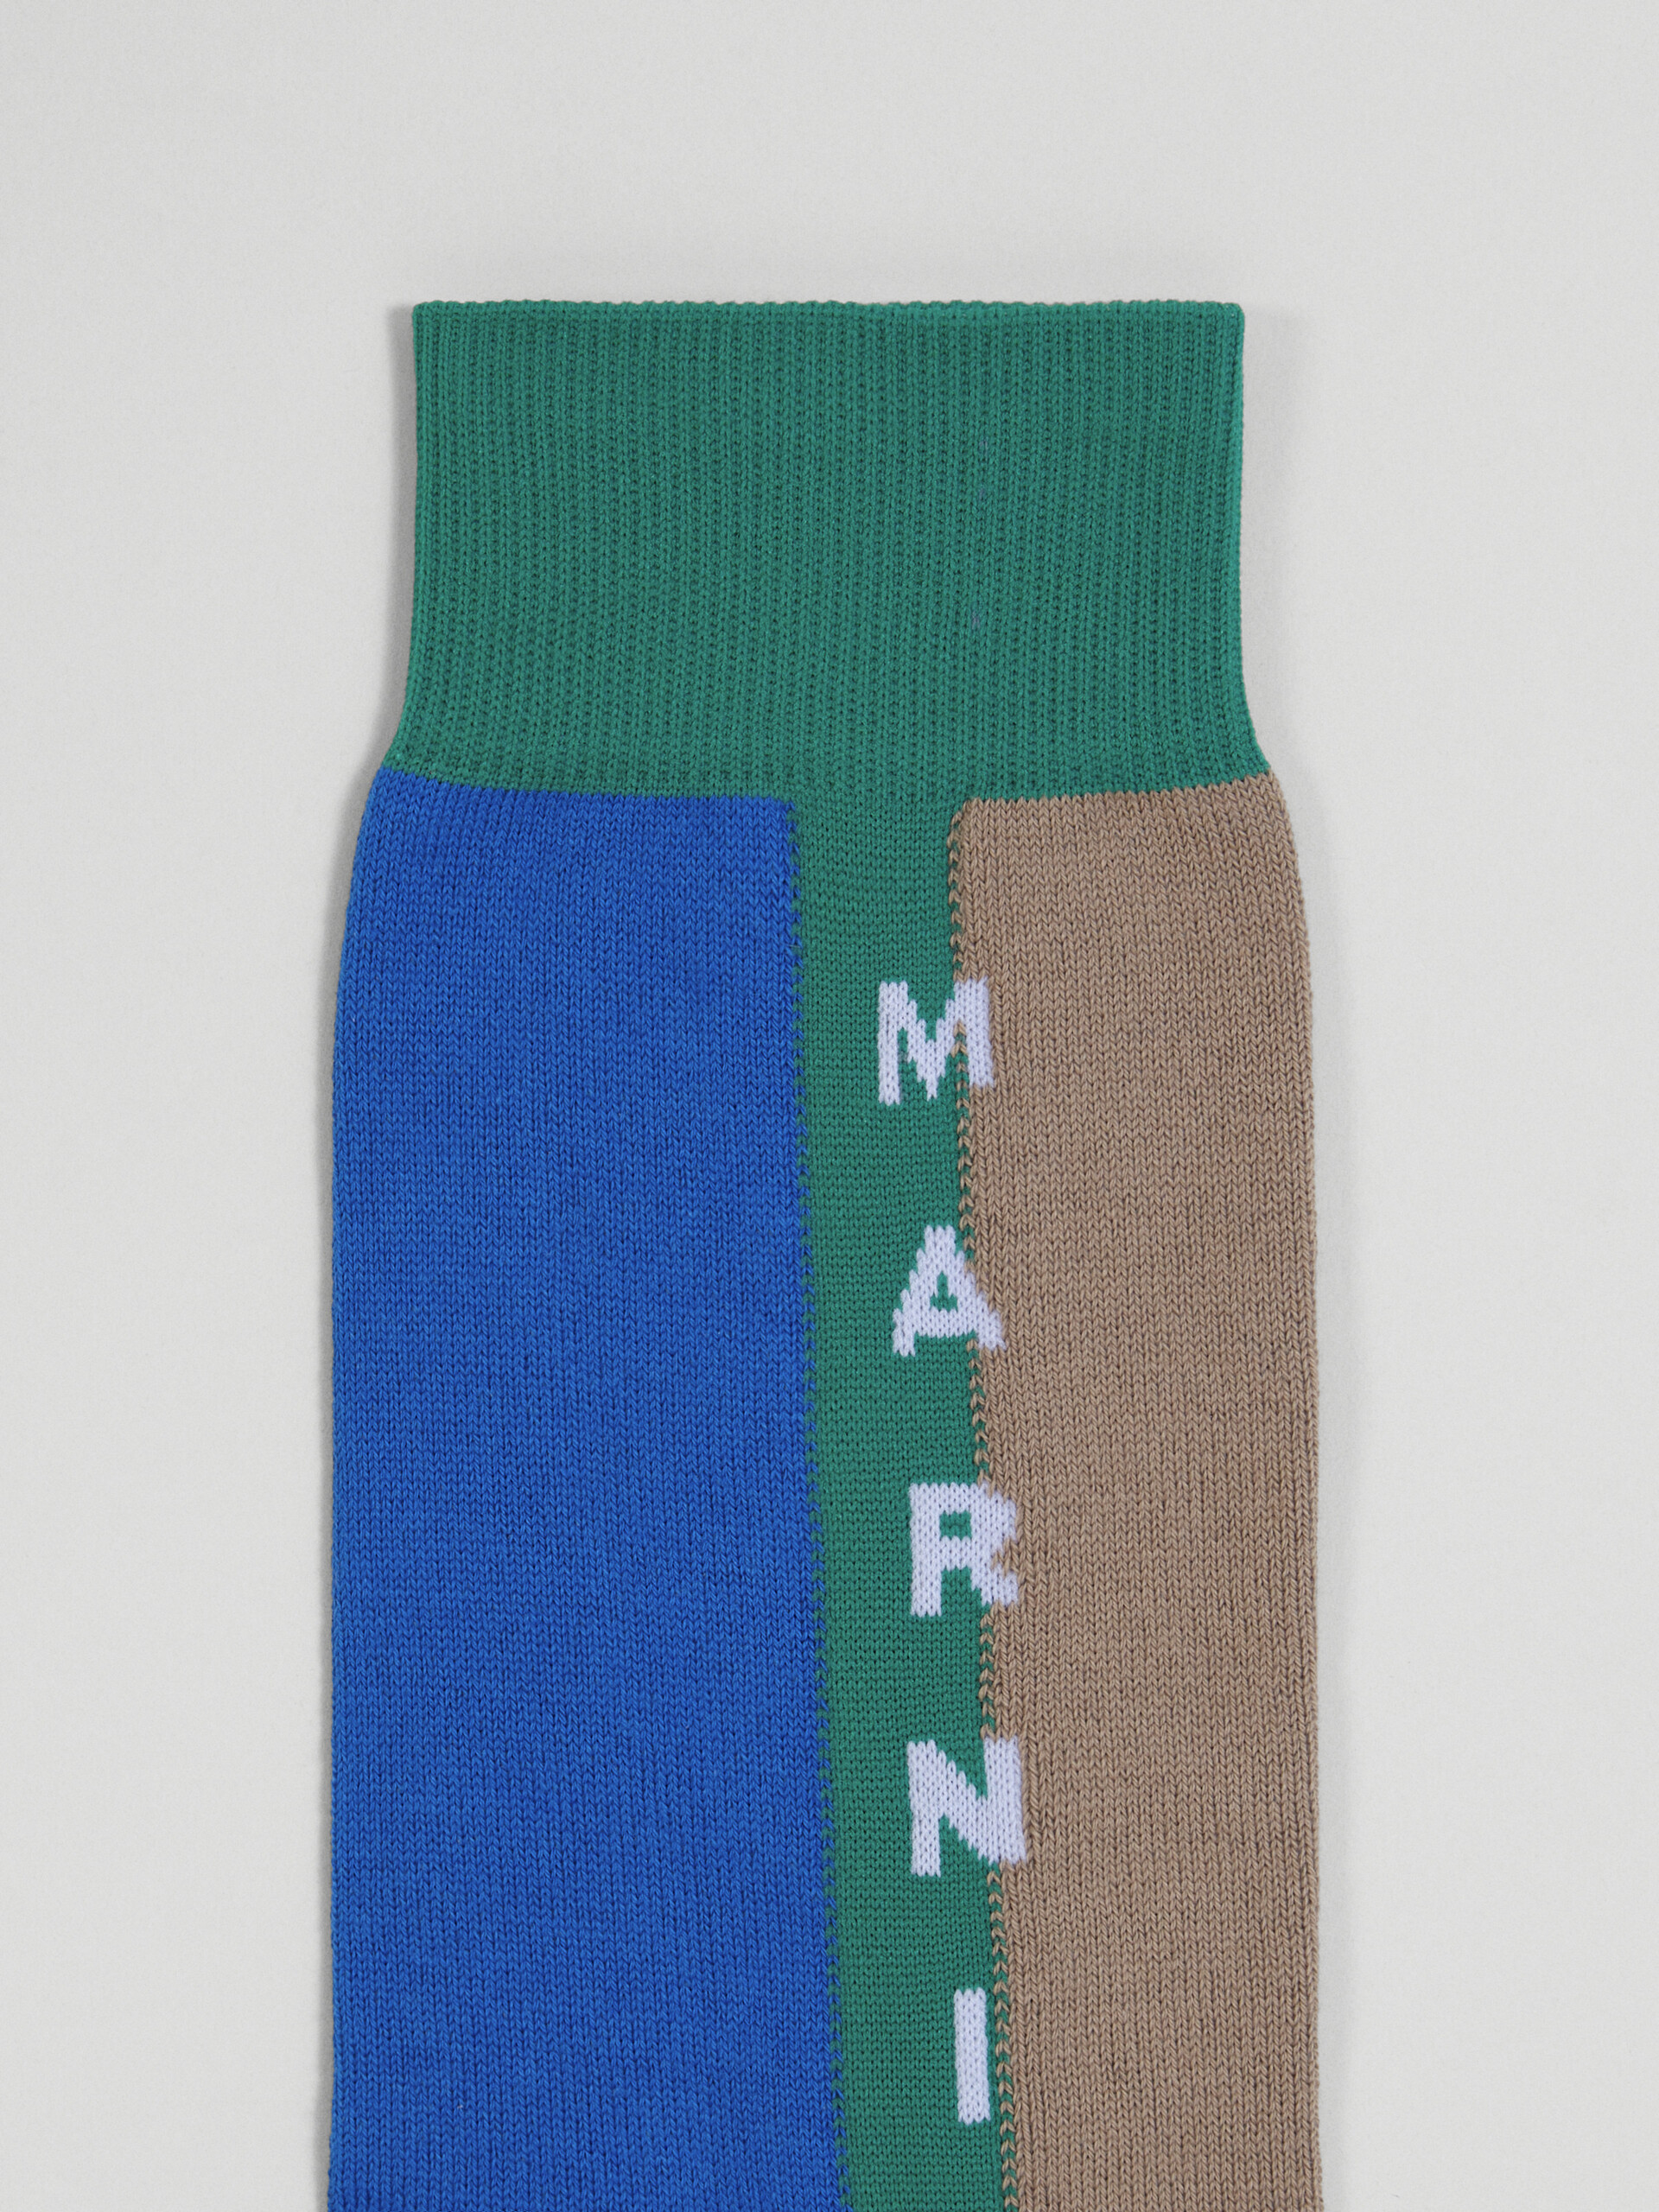 Blue and green lisle cotton and nylon sock - Socks - Image 3